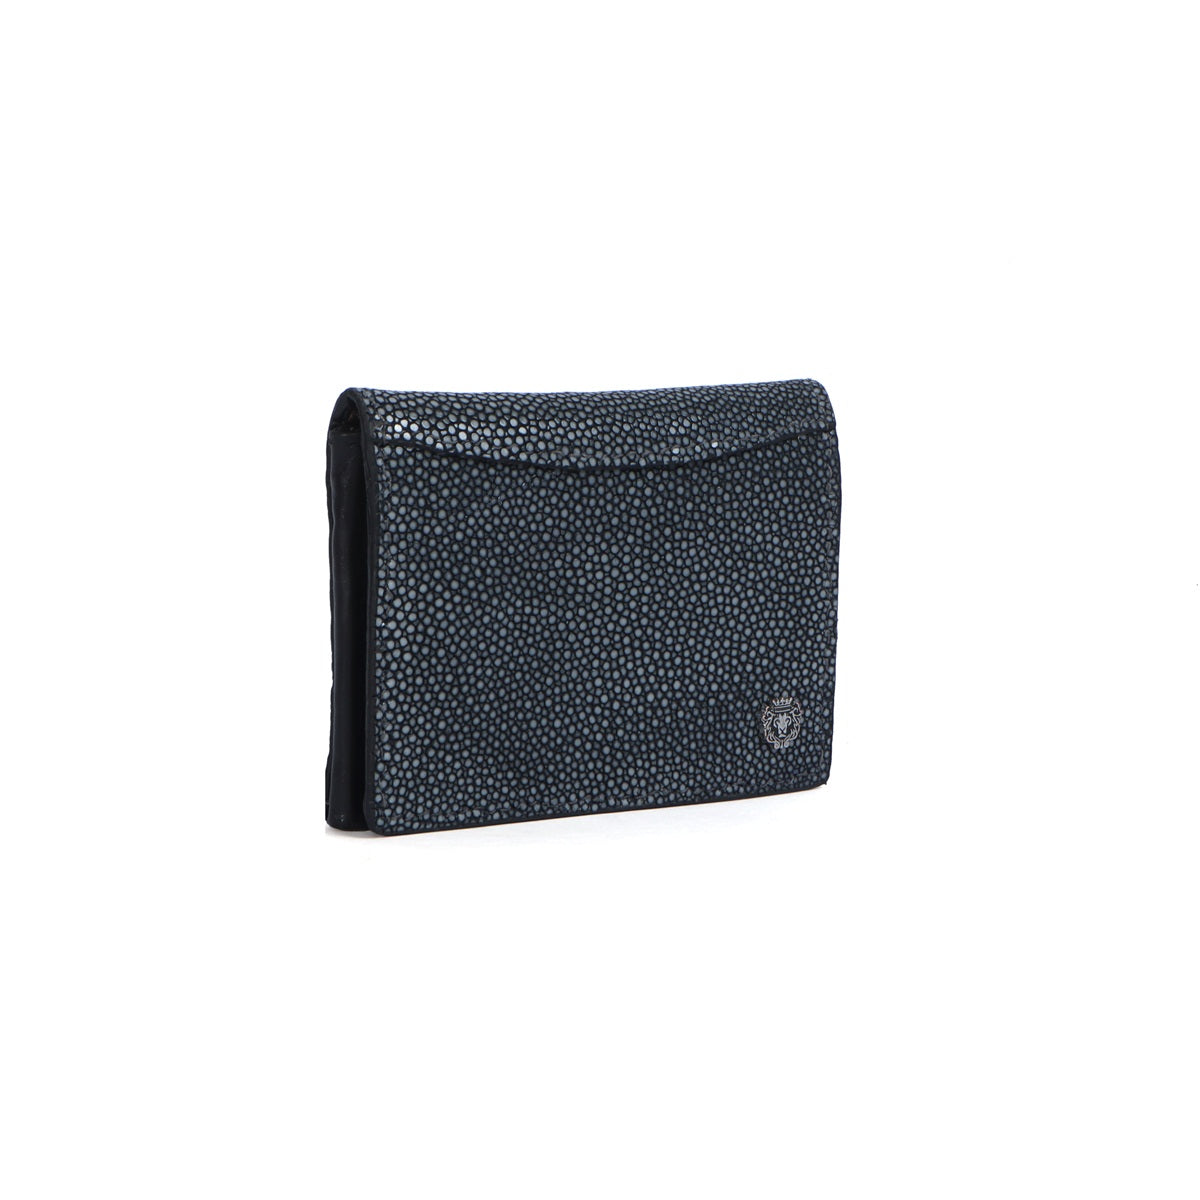 Stingray Handbag, Black Stingray Leather Purse, Genuine Stingray Leather  Totebag | eBay